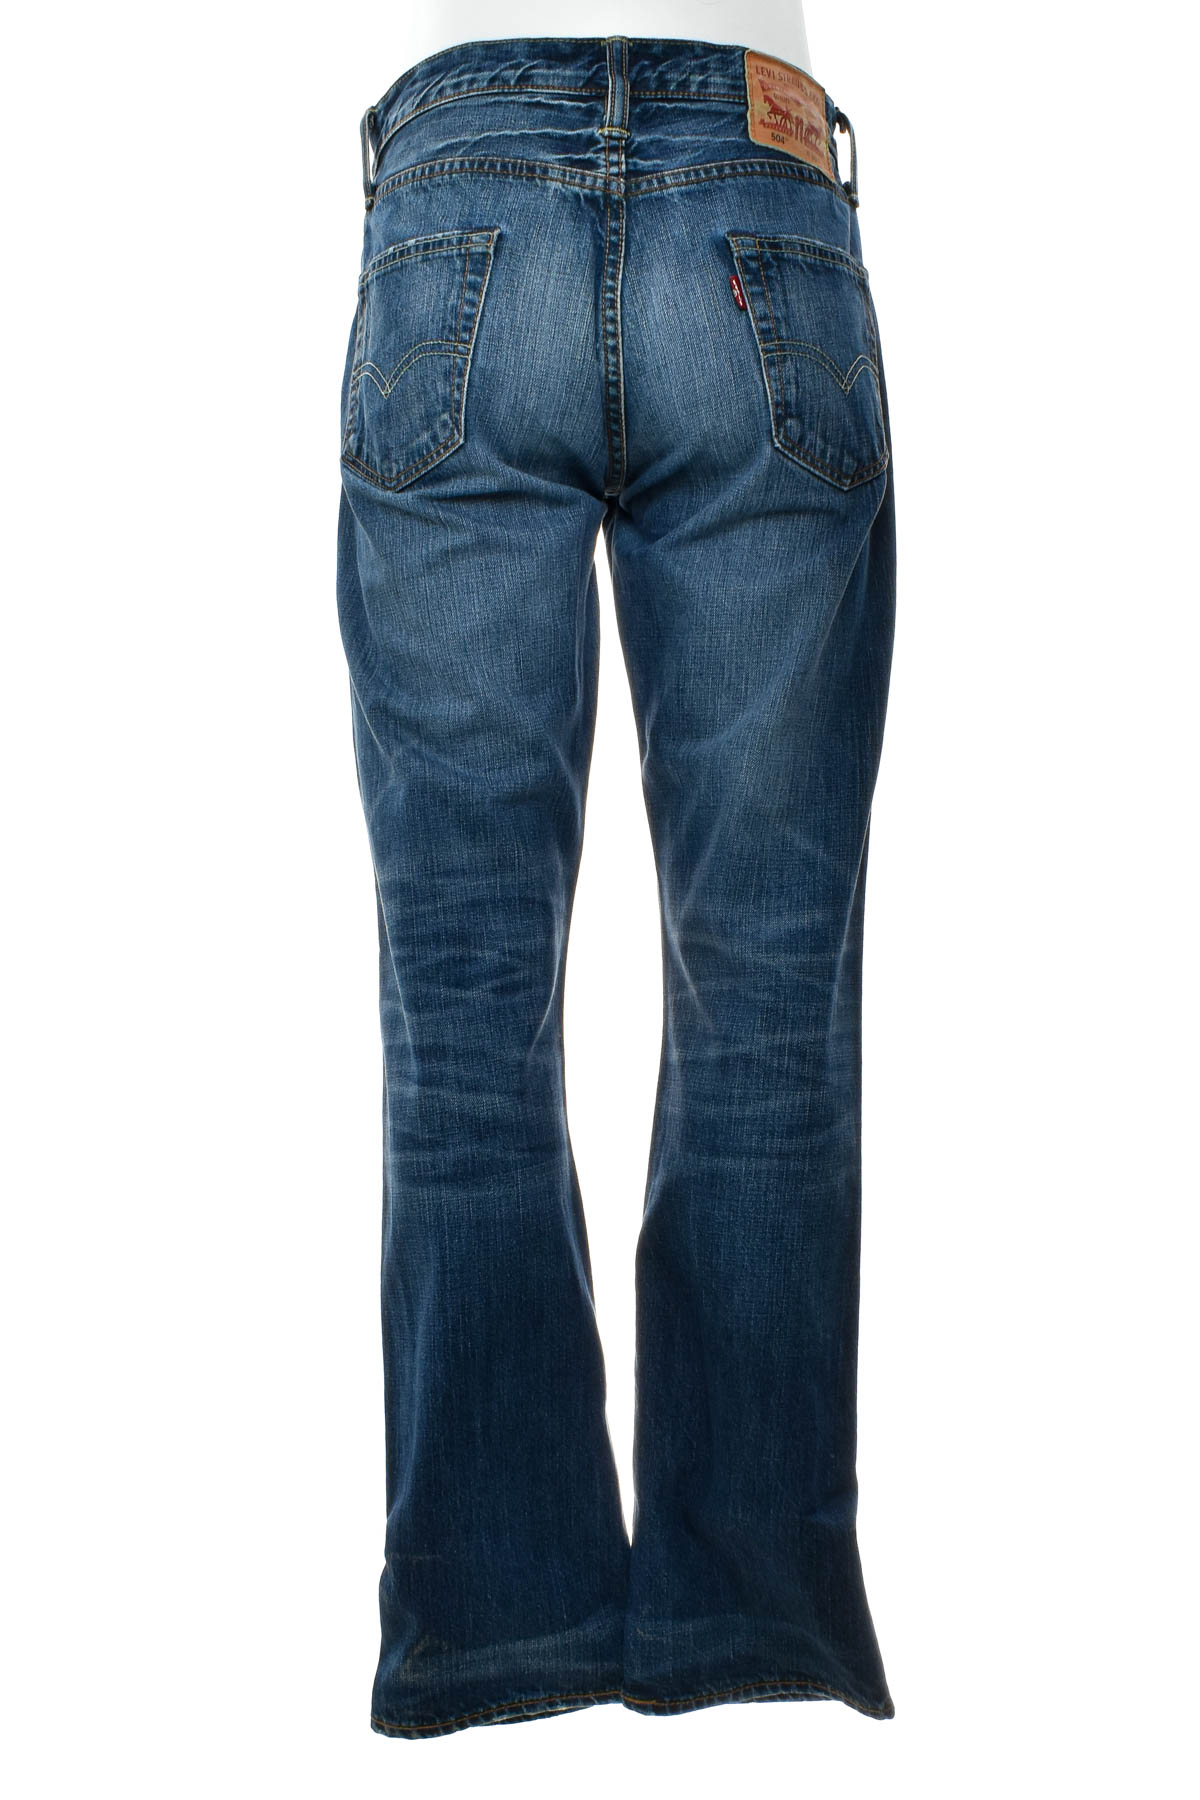 Men's jeans - Levi Strauss & Co - 1